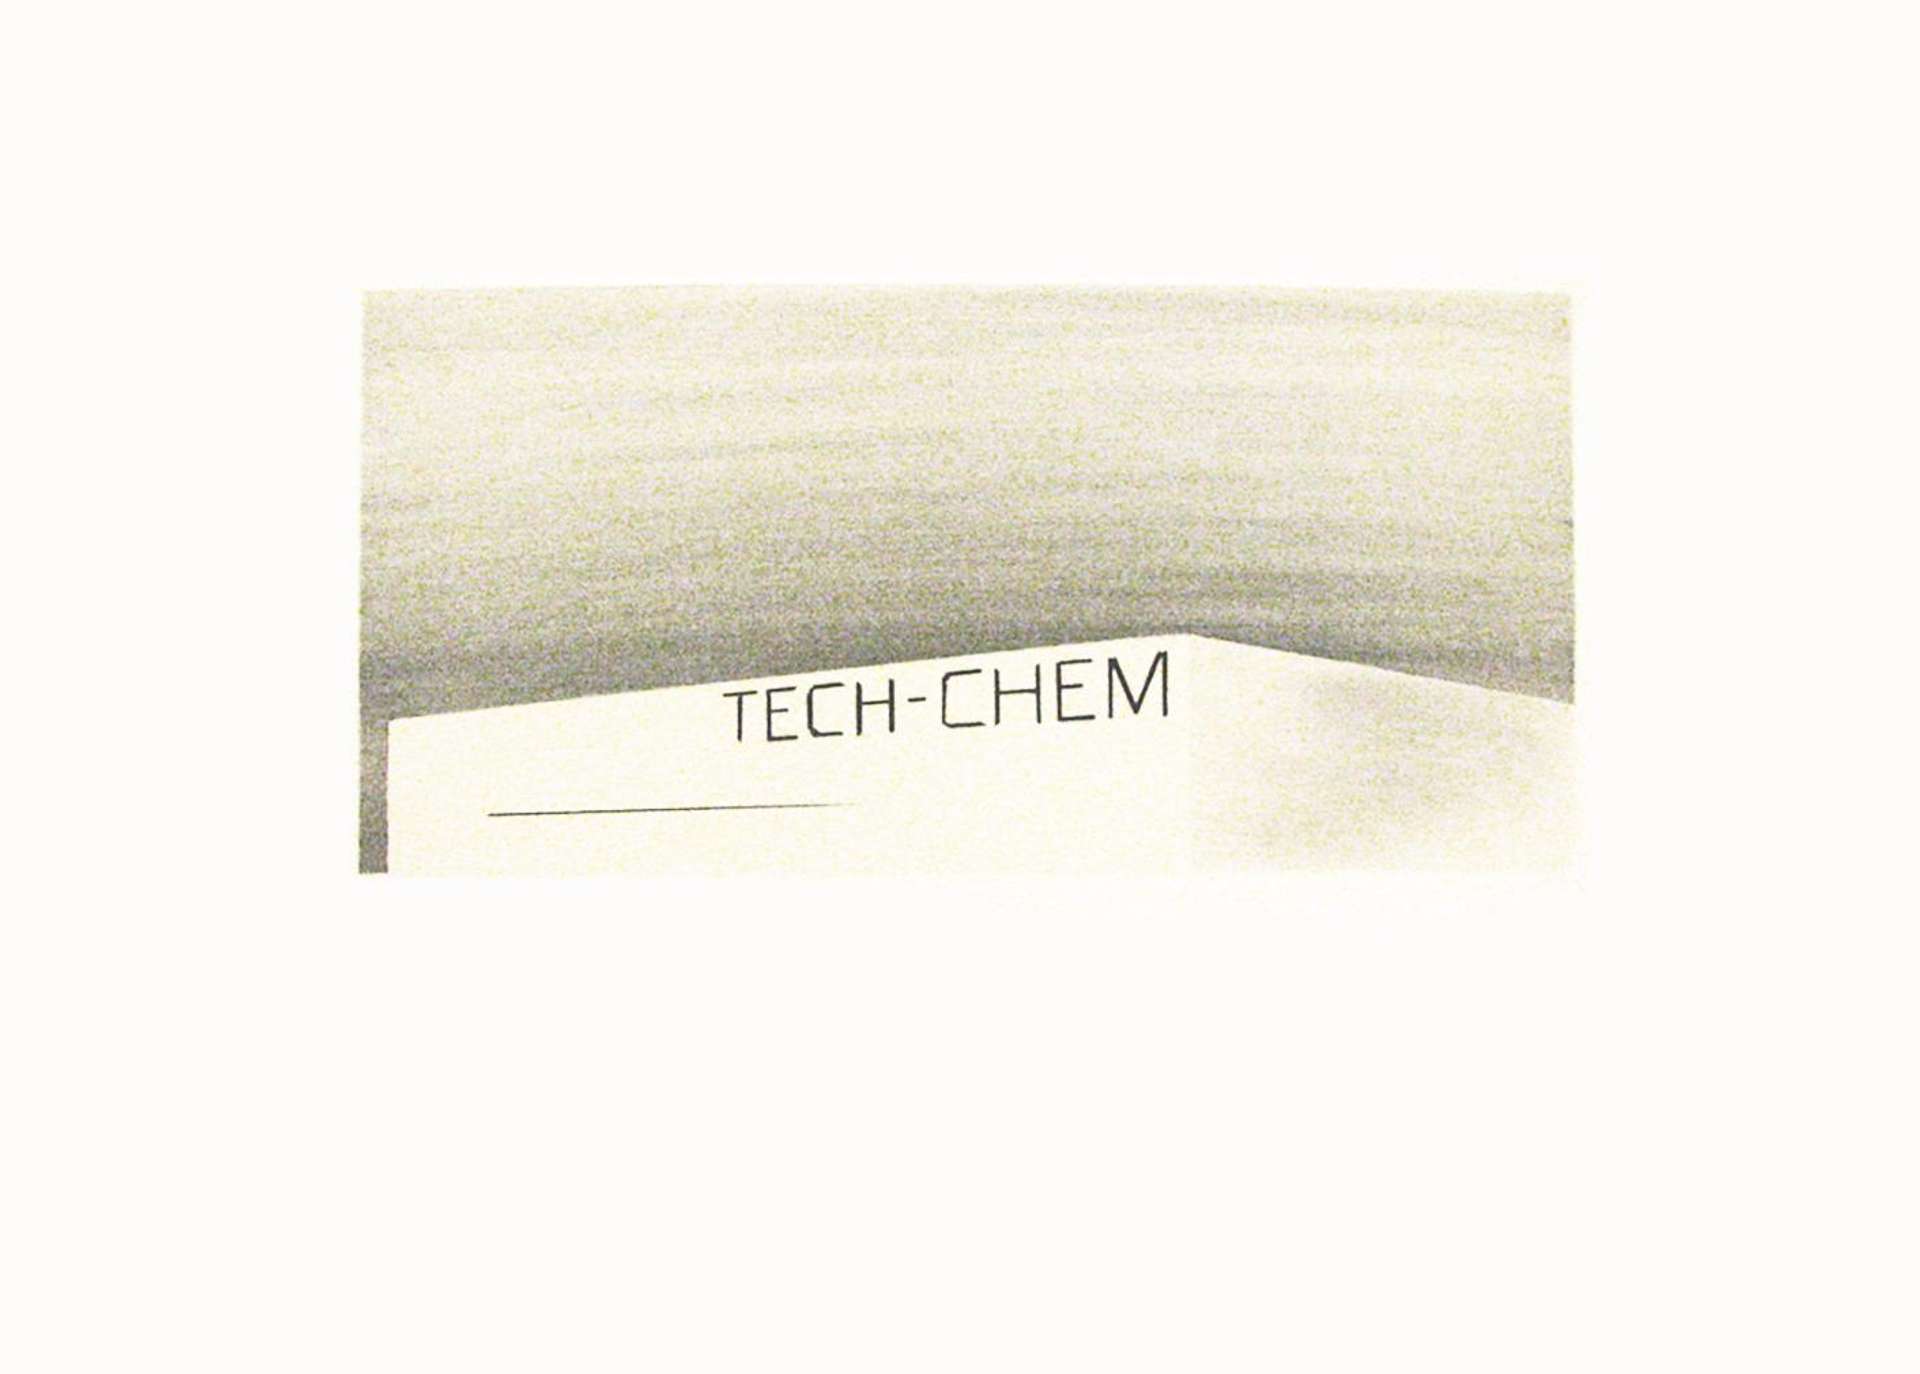 Tech-chem - Signed Print by Ed Ruscha 1994 - MyArtBroker